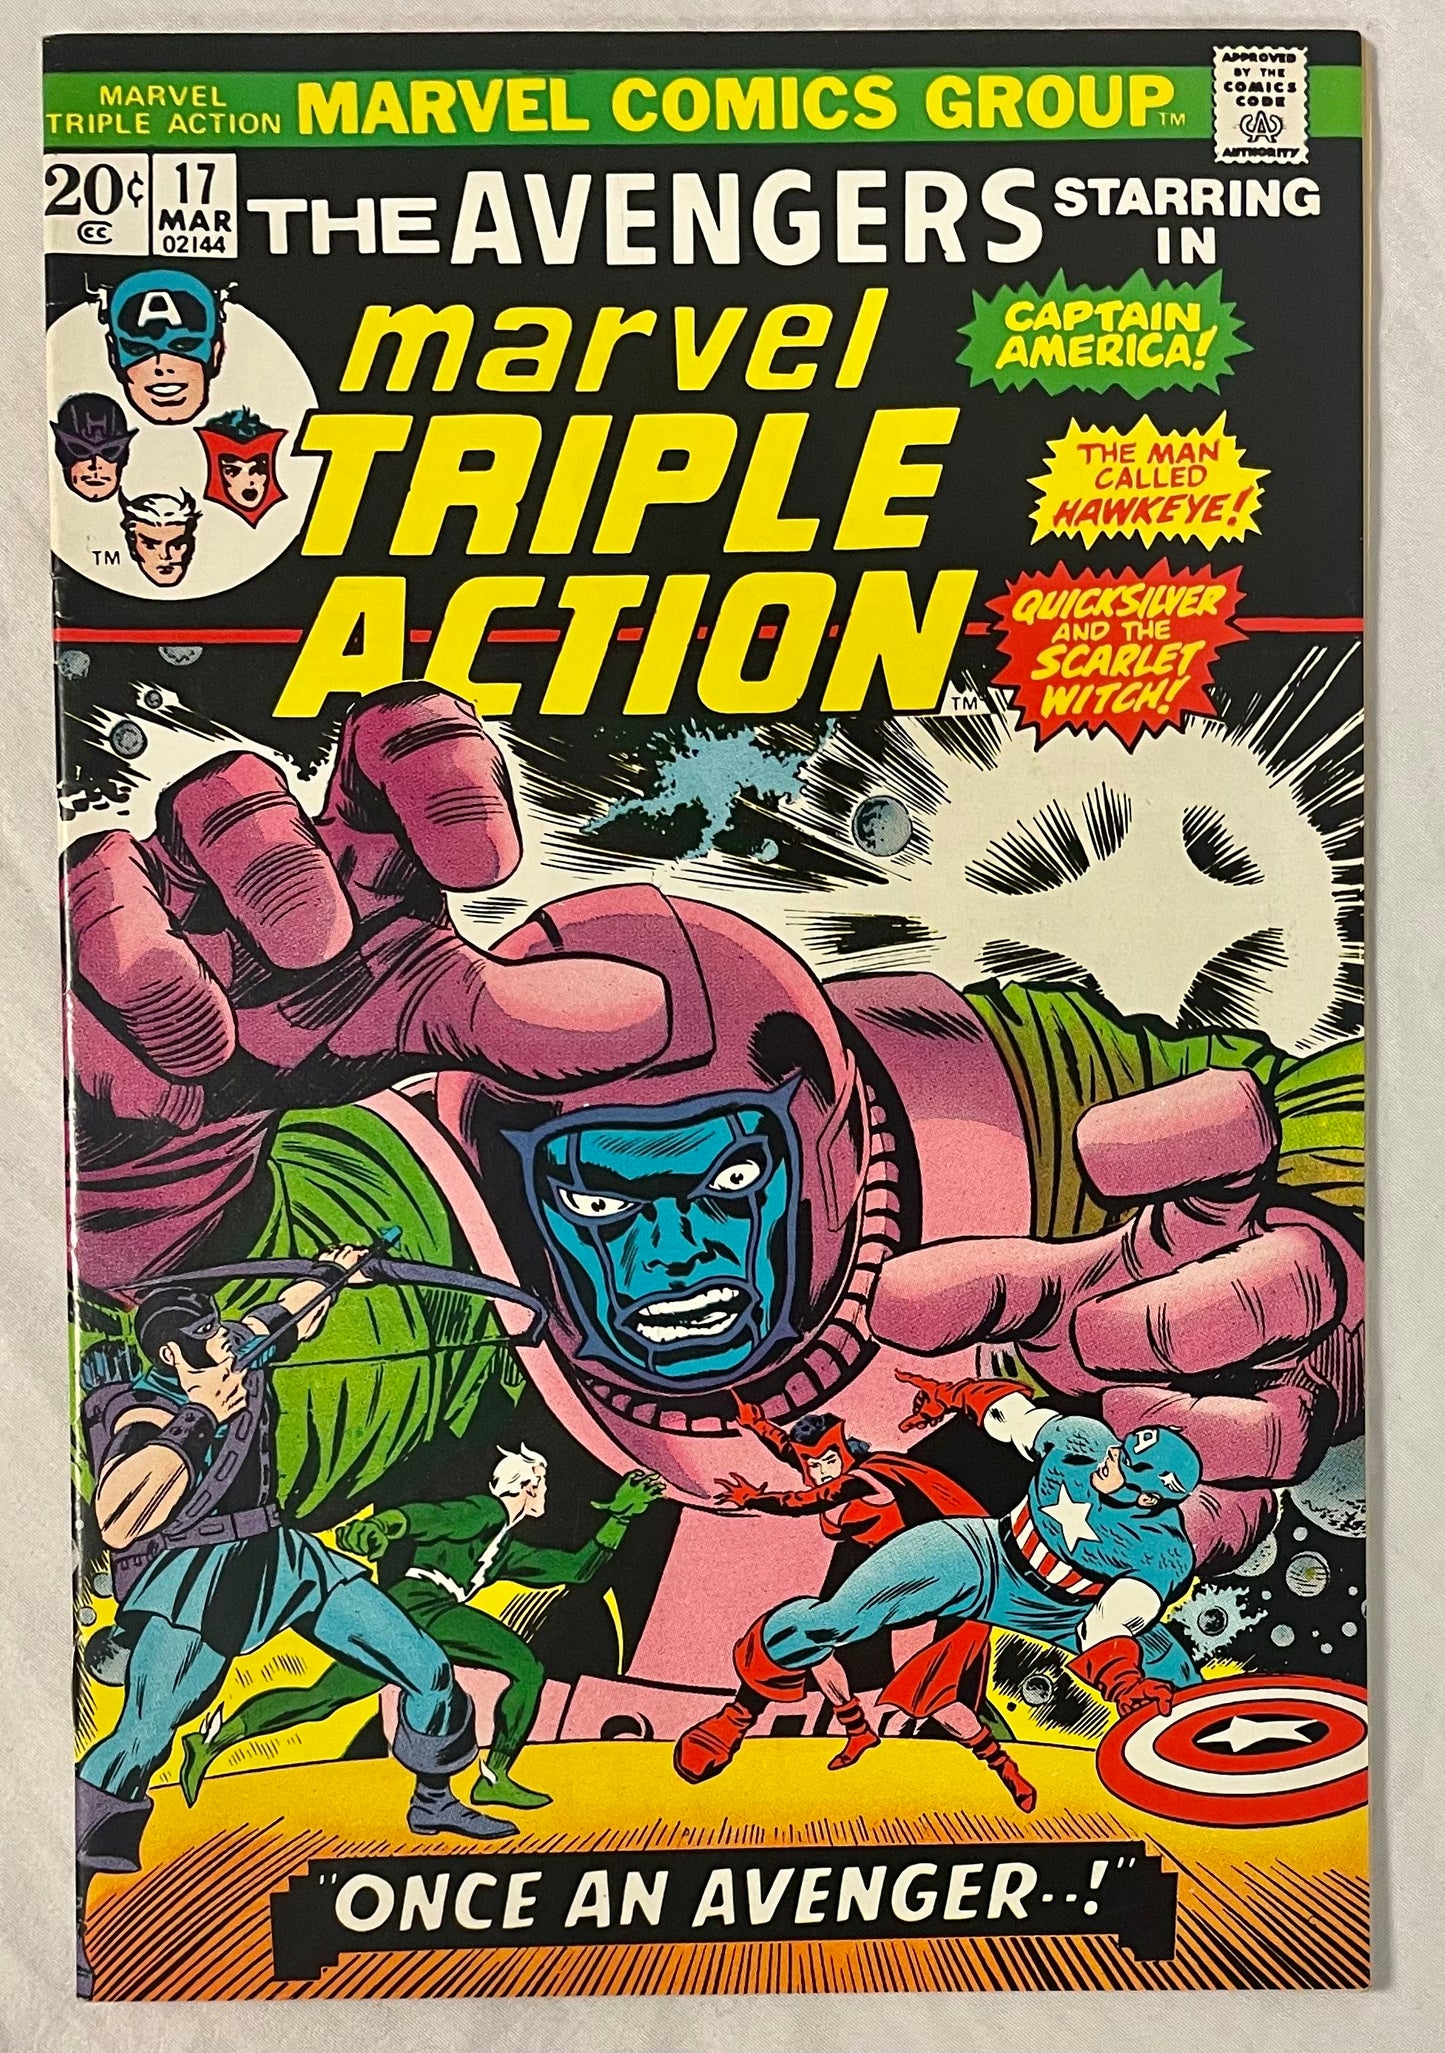 Marvel Comics Marvel Triple Action: The Avengers #17